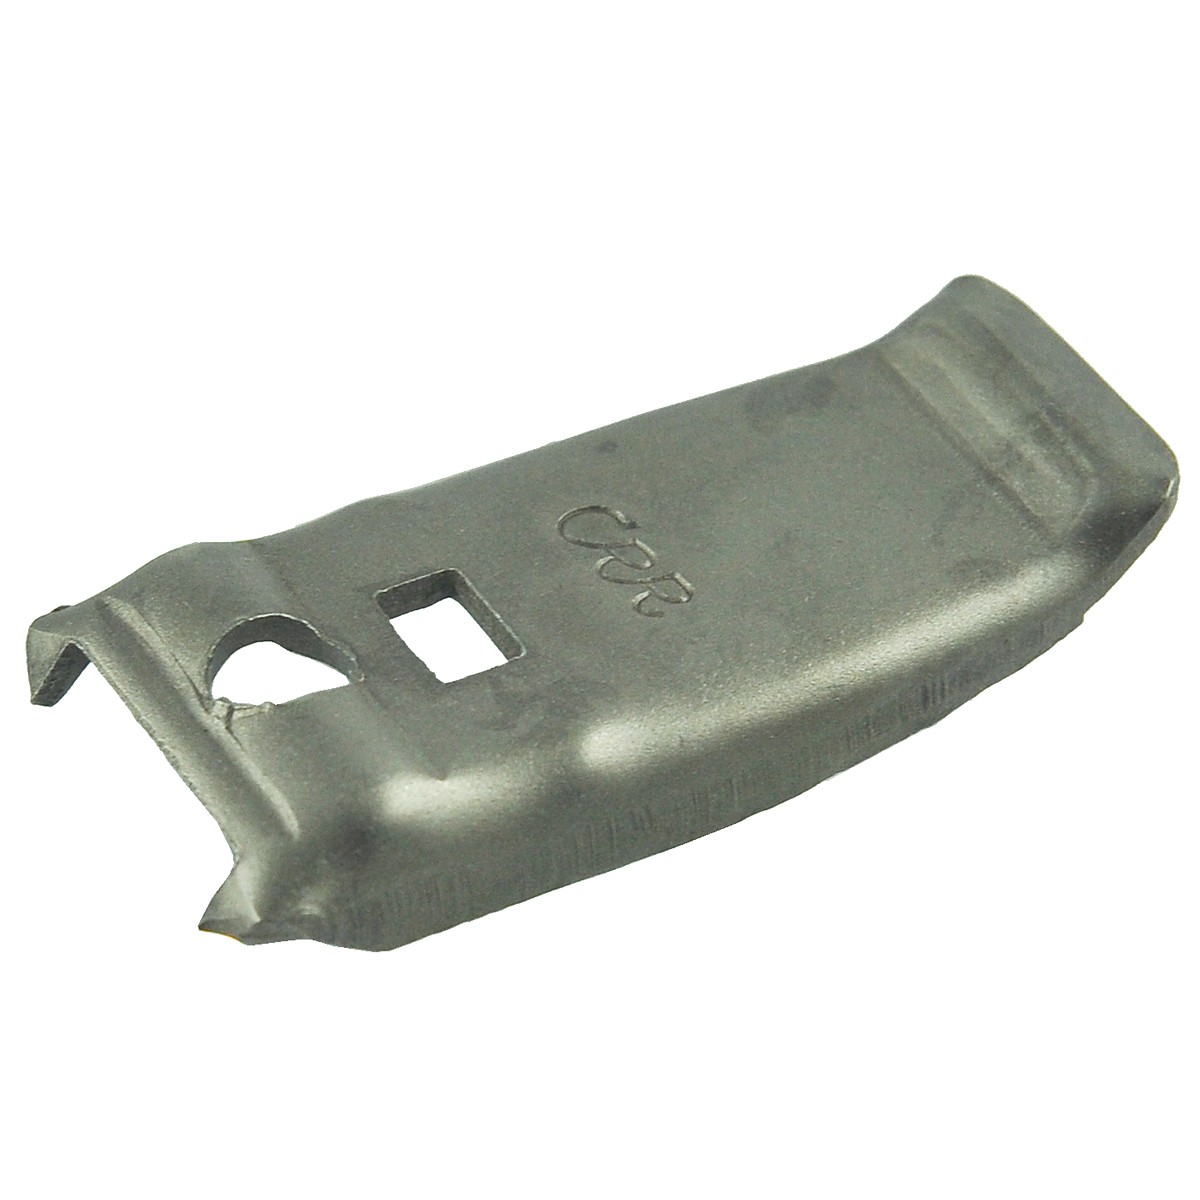 Clutch lever / 68 mm / Kubota L1500/B7000/B7001/B7100 / 32270-15540 / 5-10-101-02